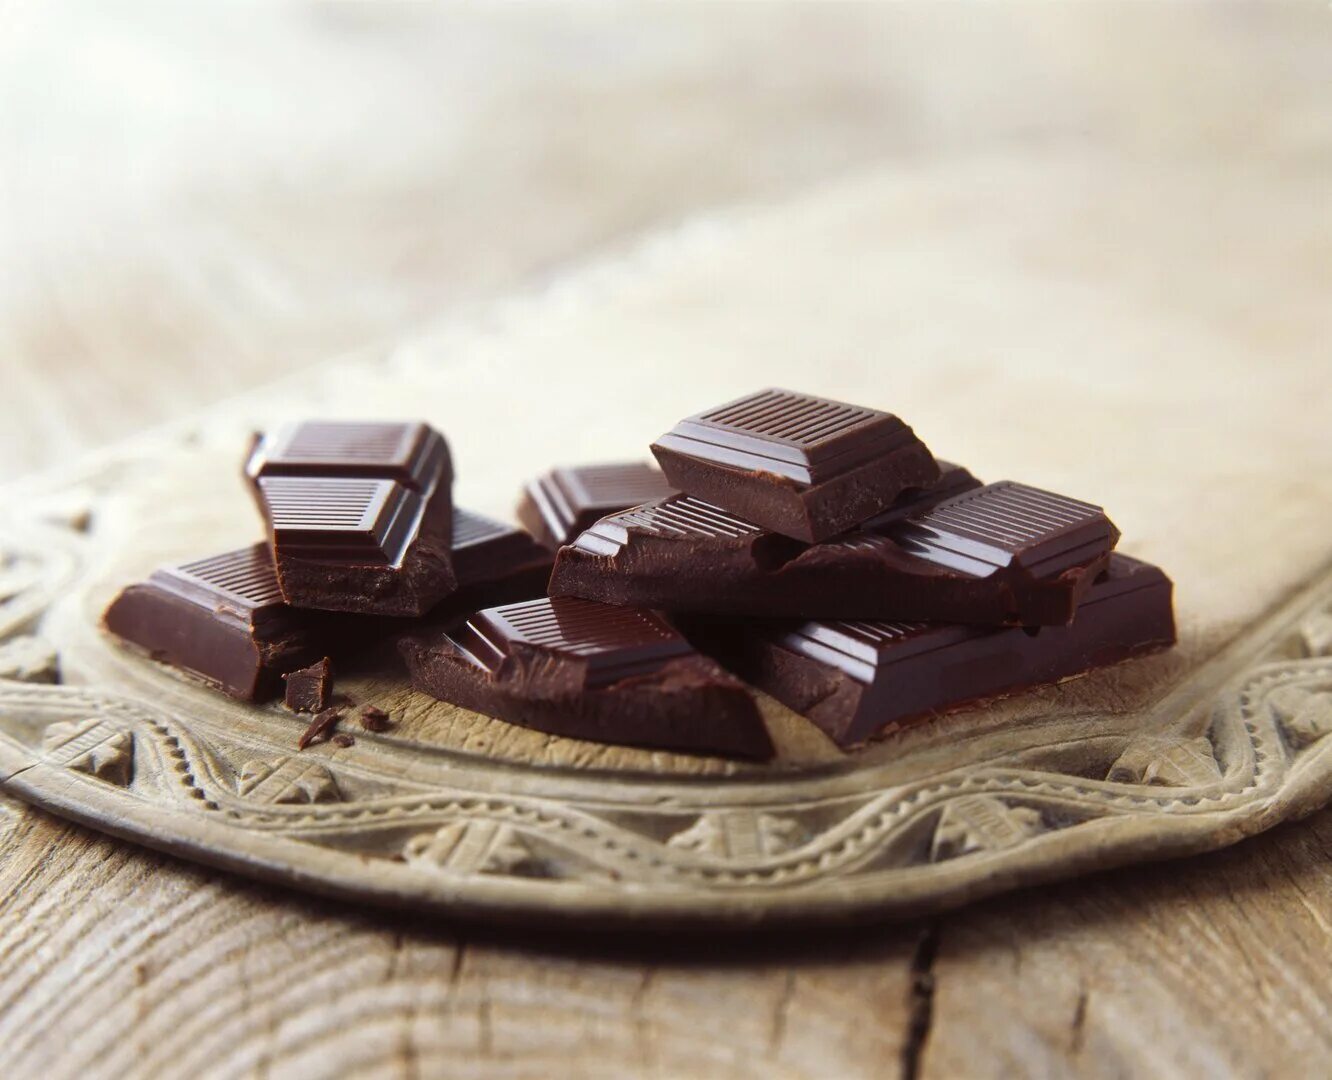 Шоколад. Темный шоколад. Шоколад Горький. Темный шоколад и Горький шоколад.